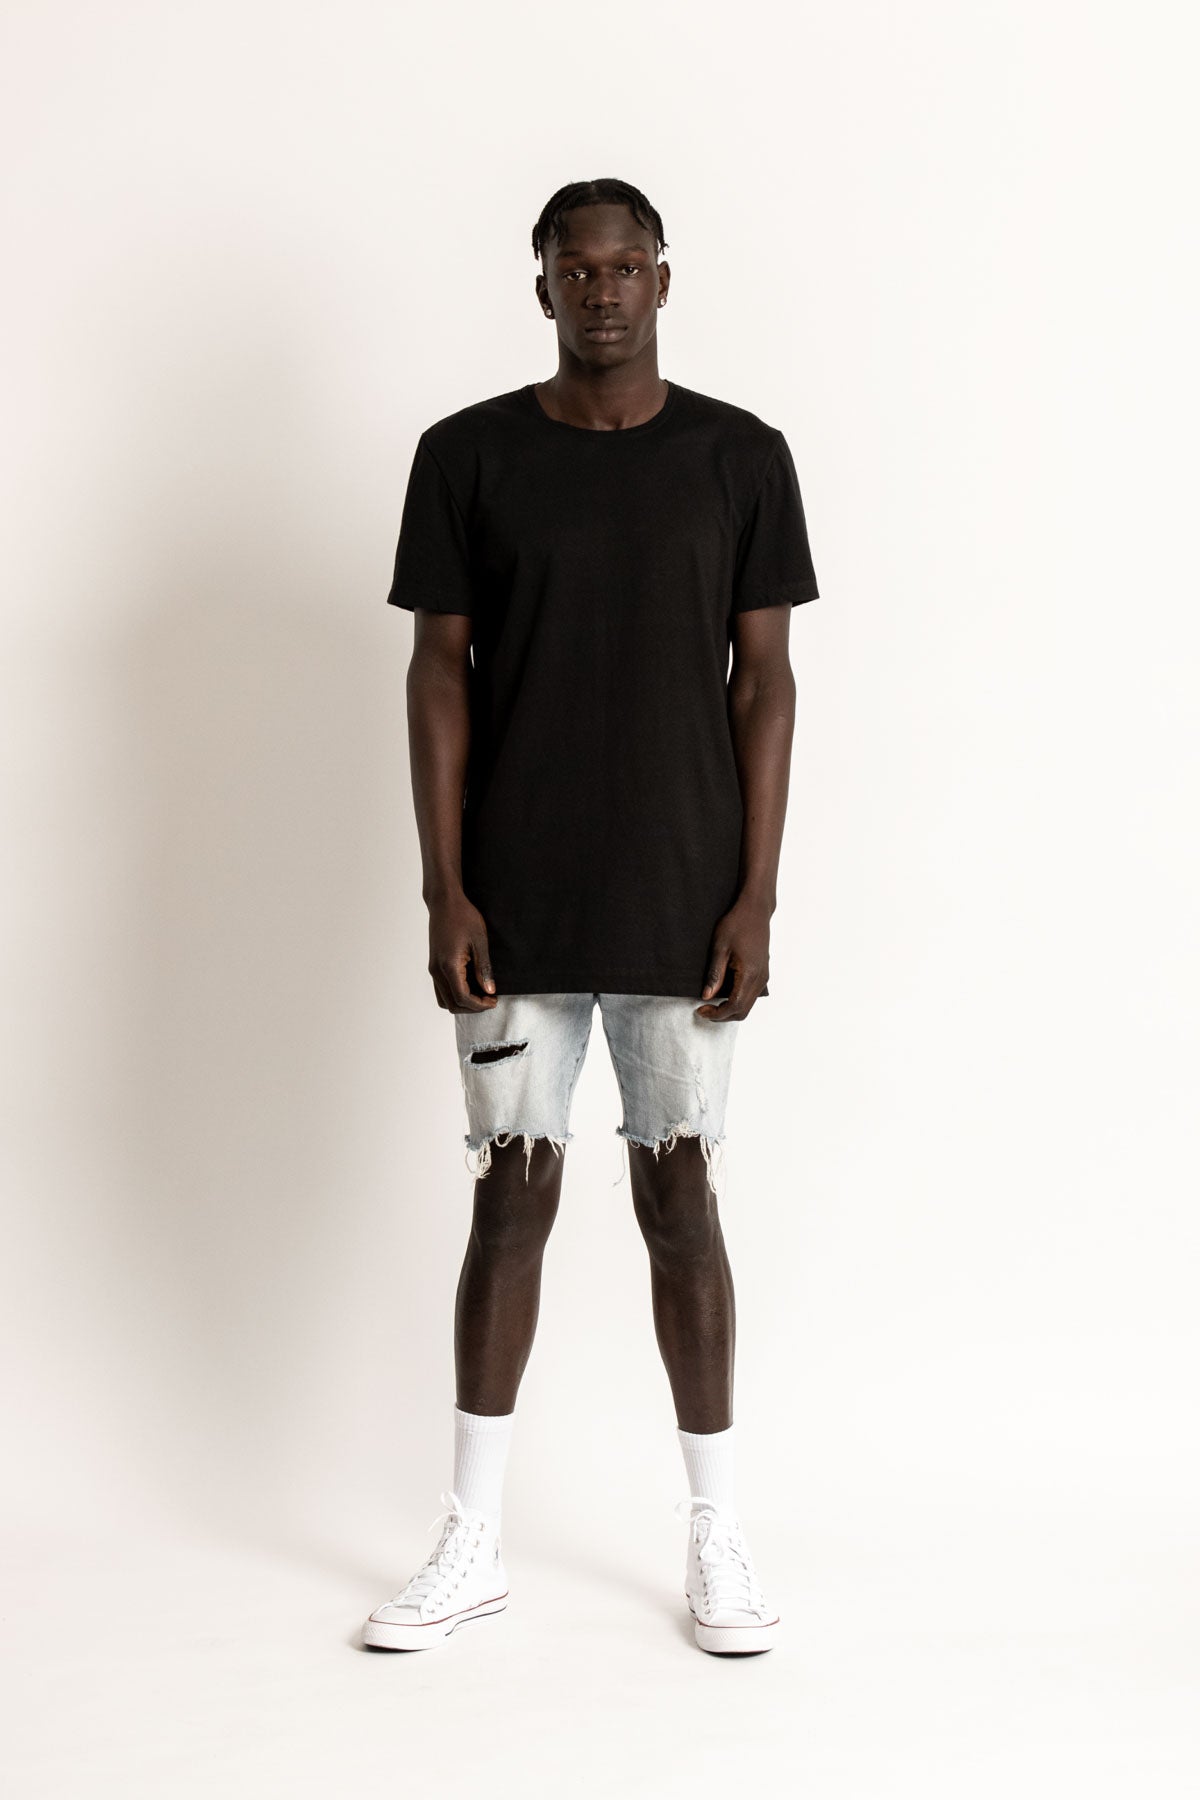 Mister Bladin Black Australian made ethical sustainable organic cotton mens tshirt tailored slim fit